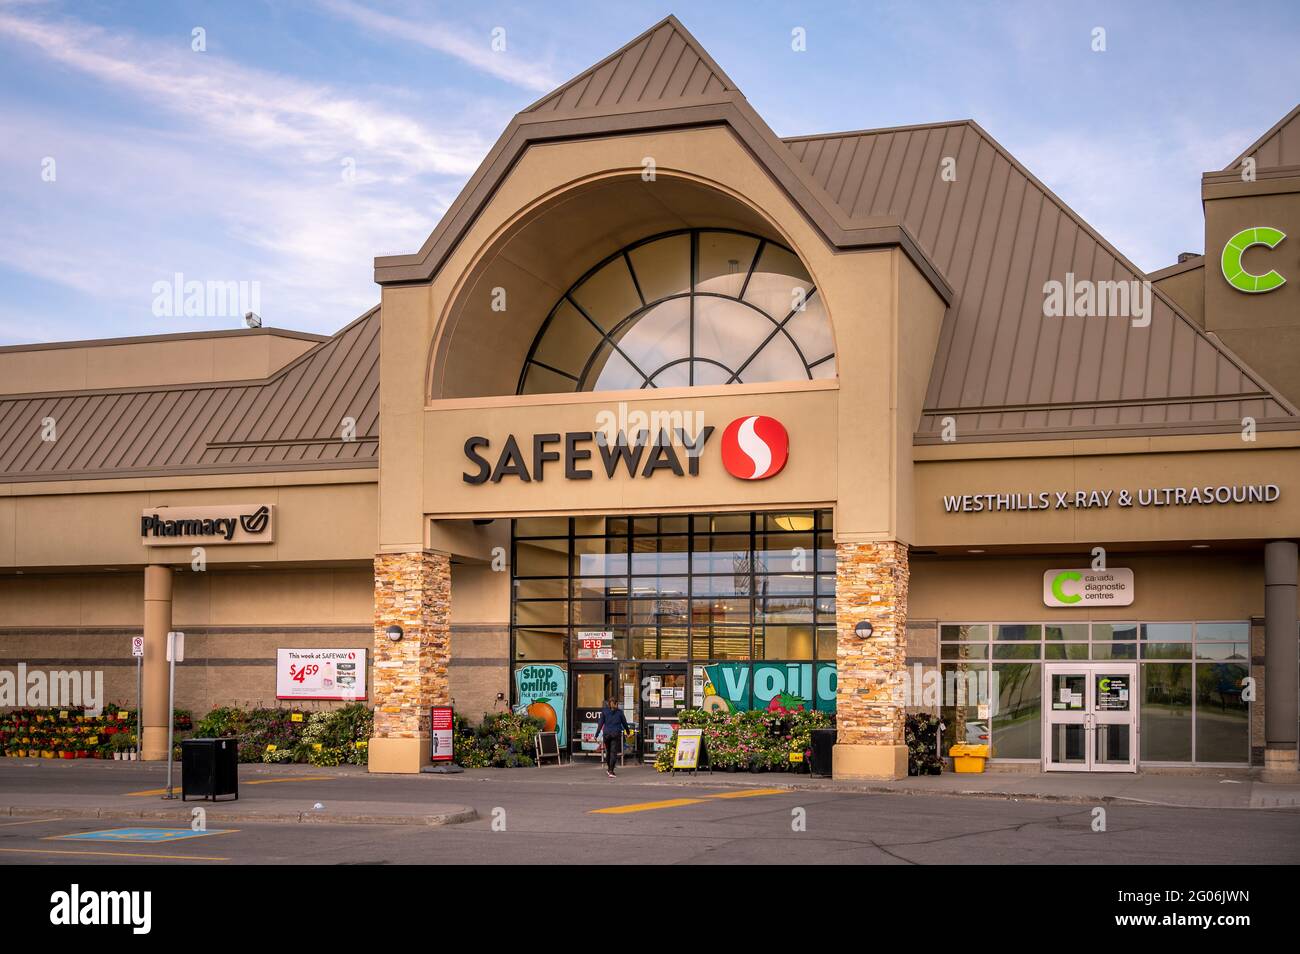 Calgary, Alberta - May 30, 2021:  Exterior facade of a Safeway grocery store in Calgary, Alberta. Stock Photo